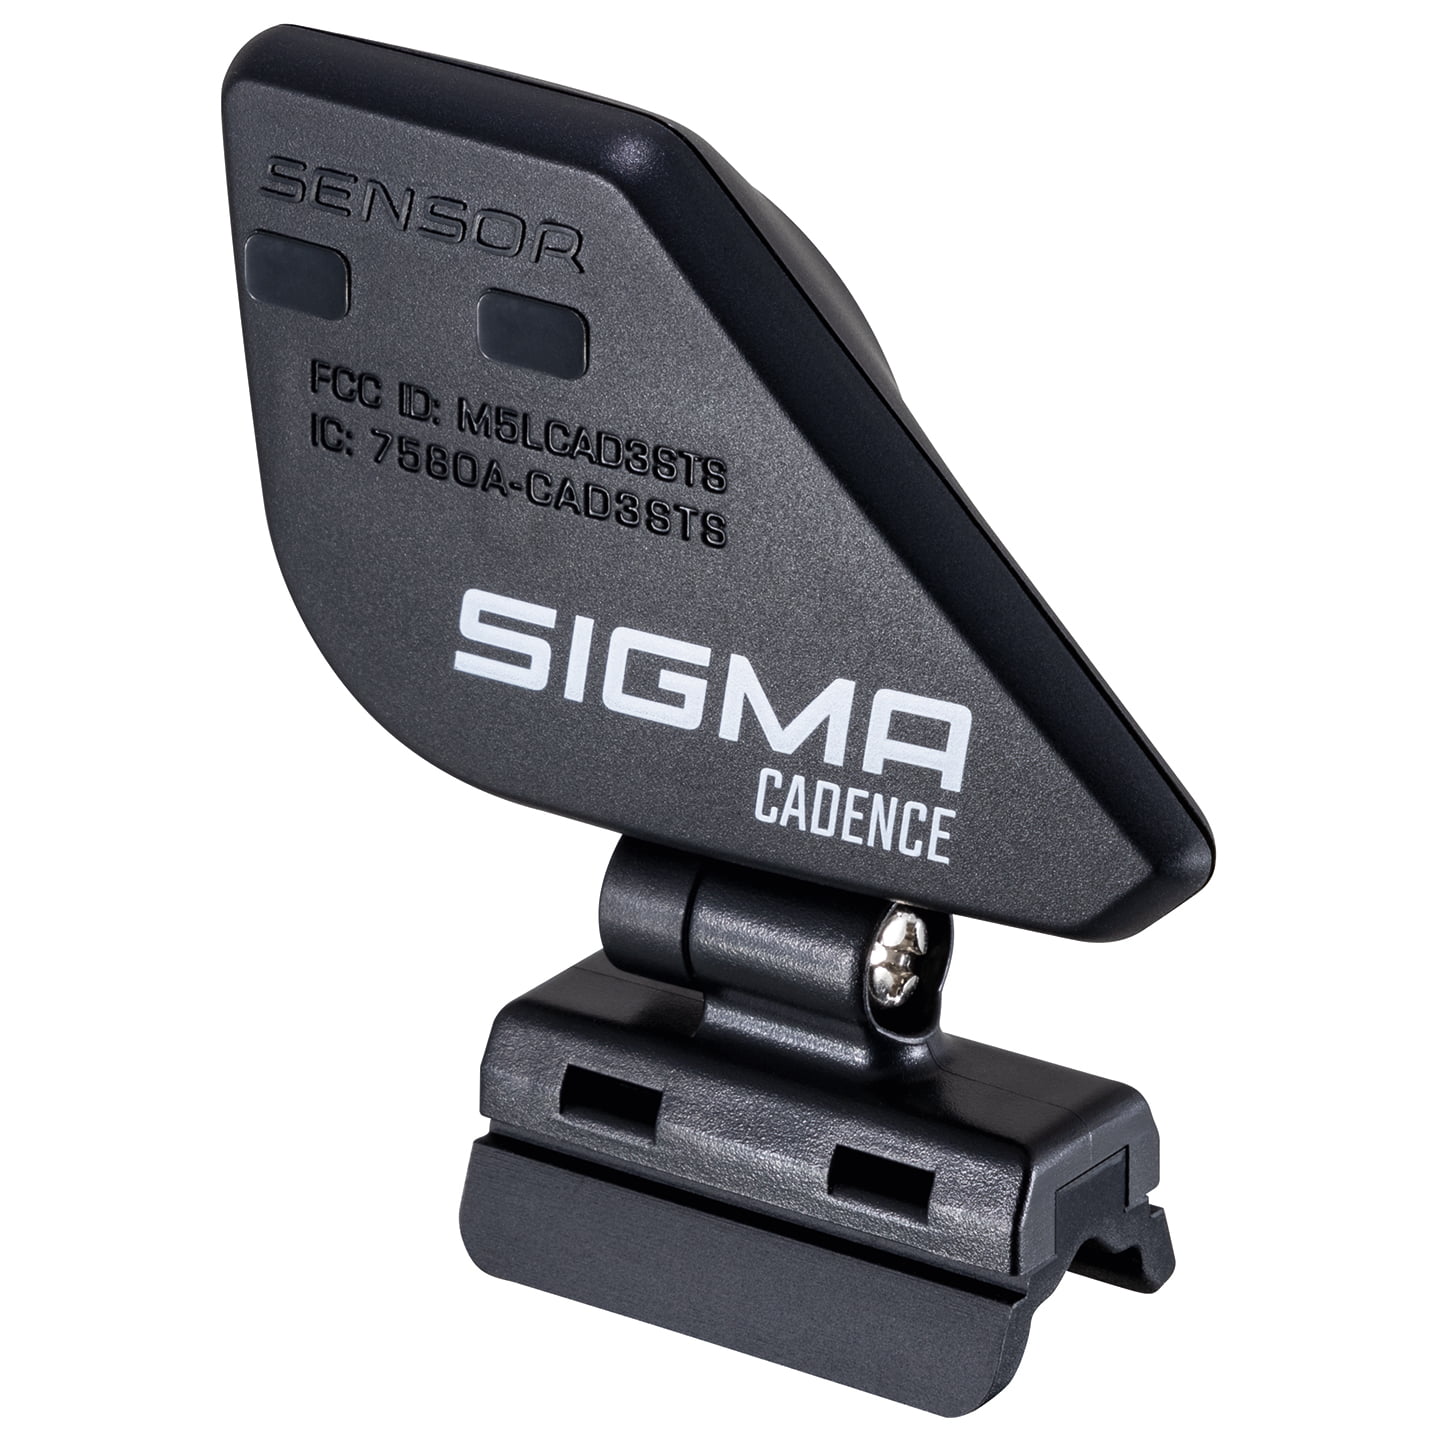 SIGMA CAD STS Cadence Meter Kit, Bike accessories